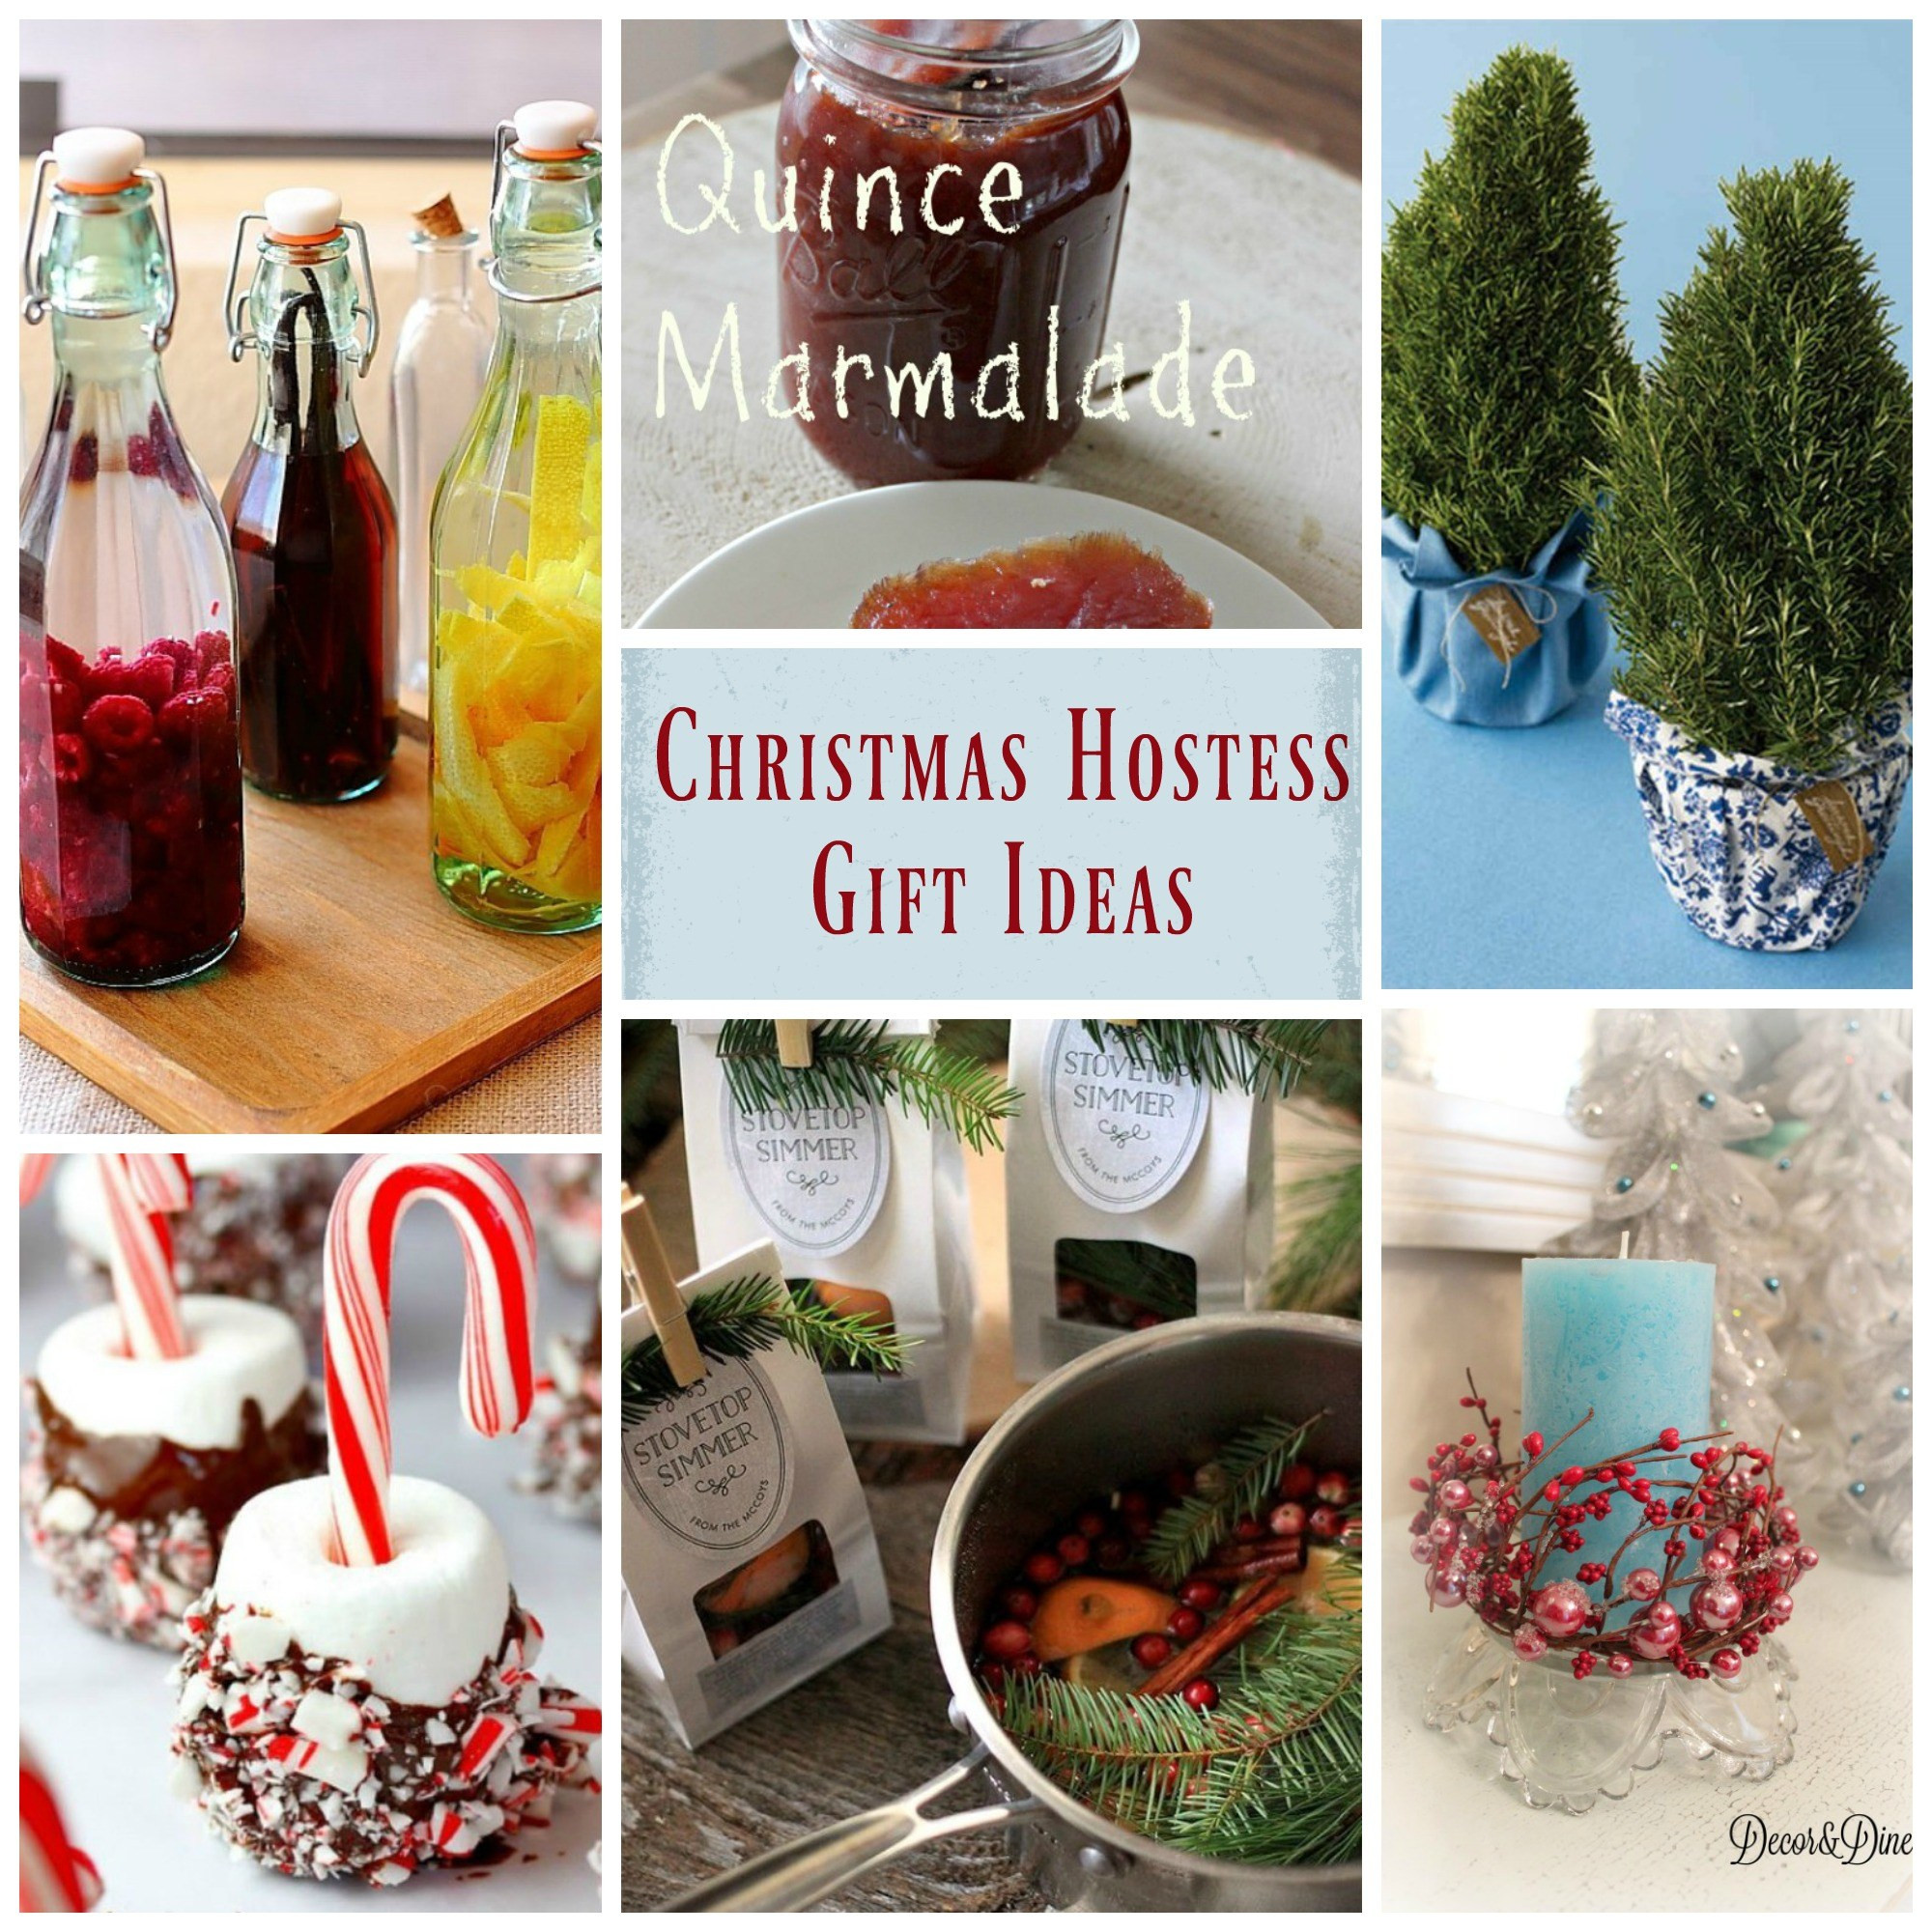 Best ideas about Christmas Hostess Gift Ideas
. Save or Pin Christmas Hostess Gift Ideas Now.